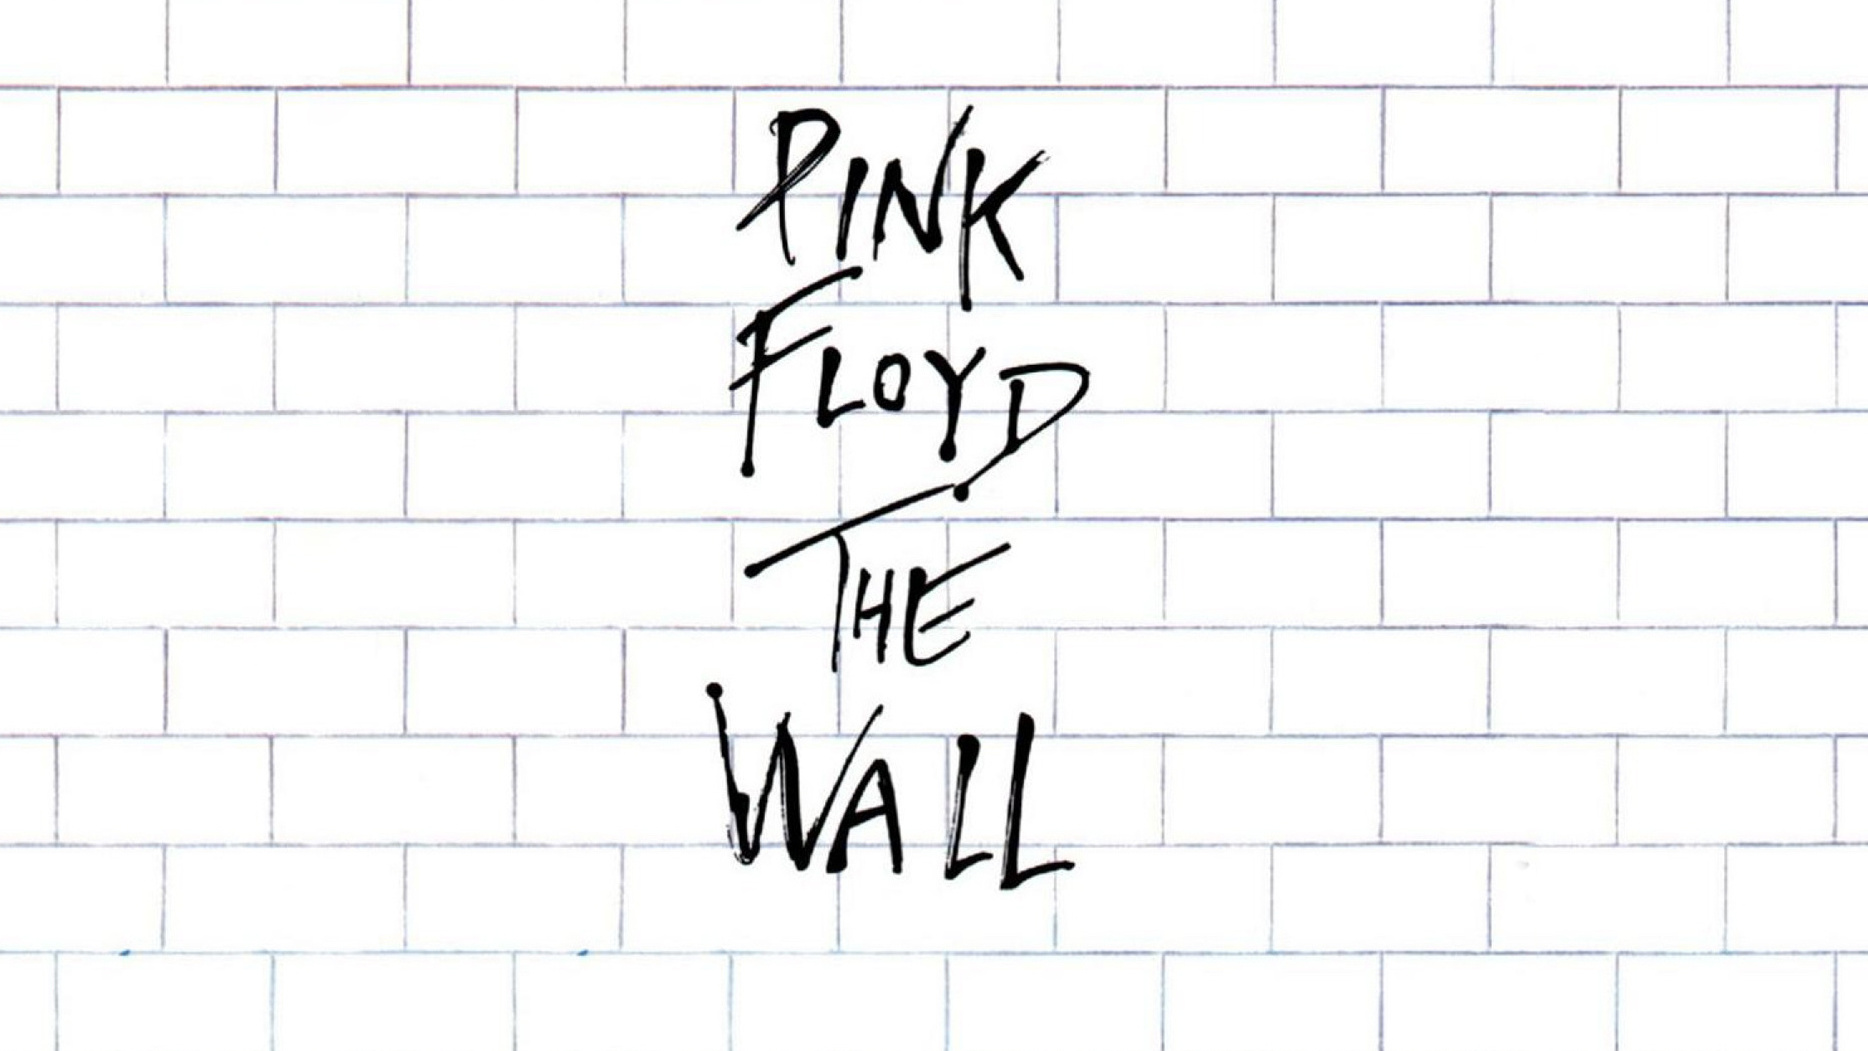 pink floyd the wall album artwork